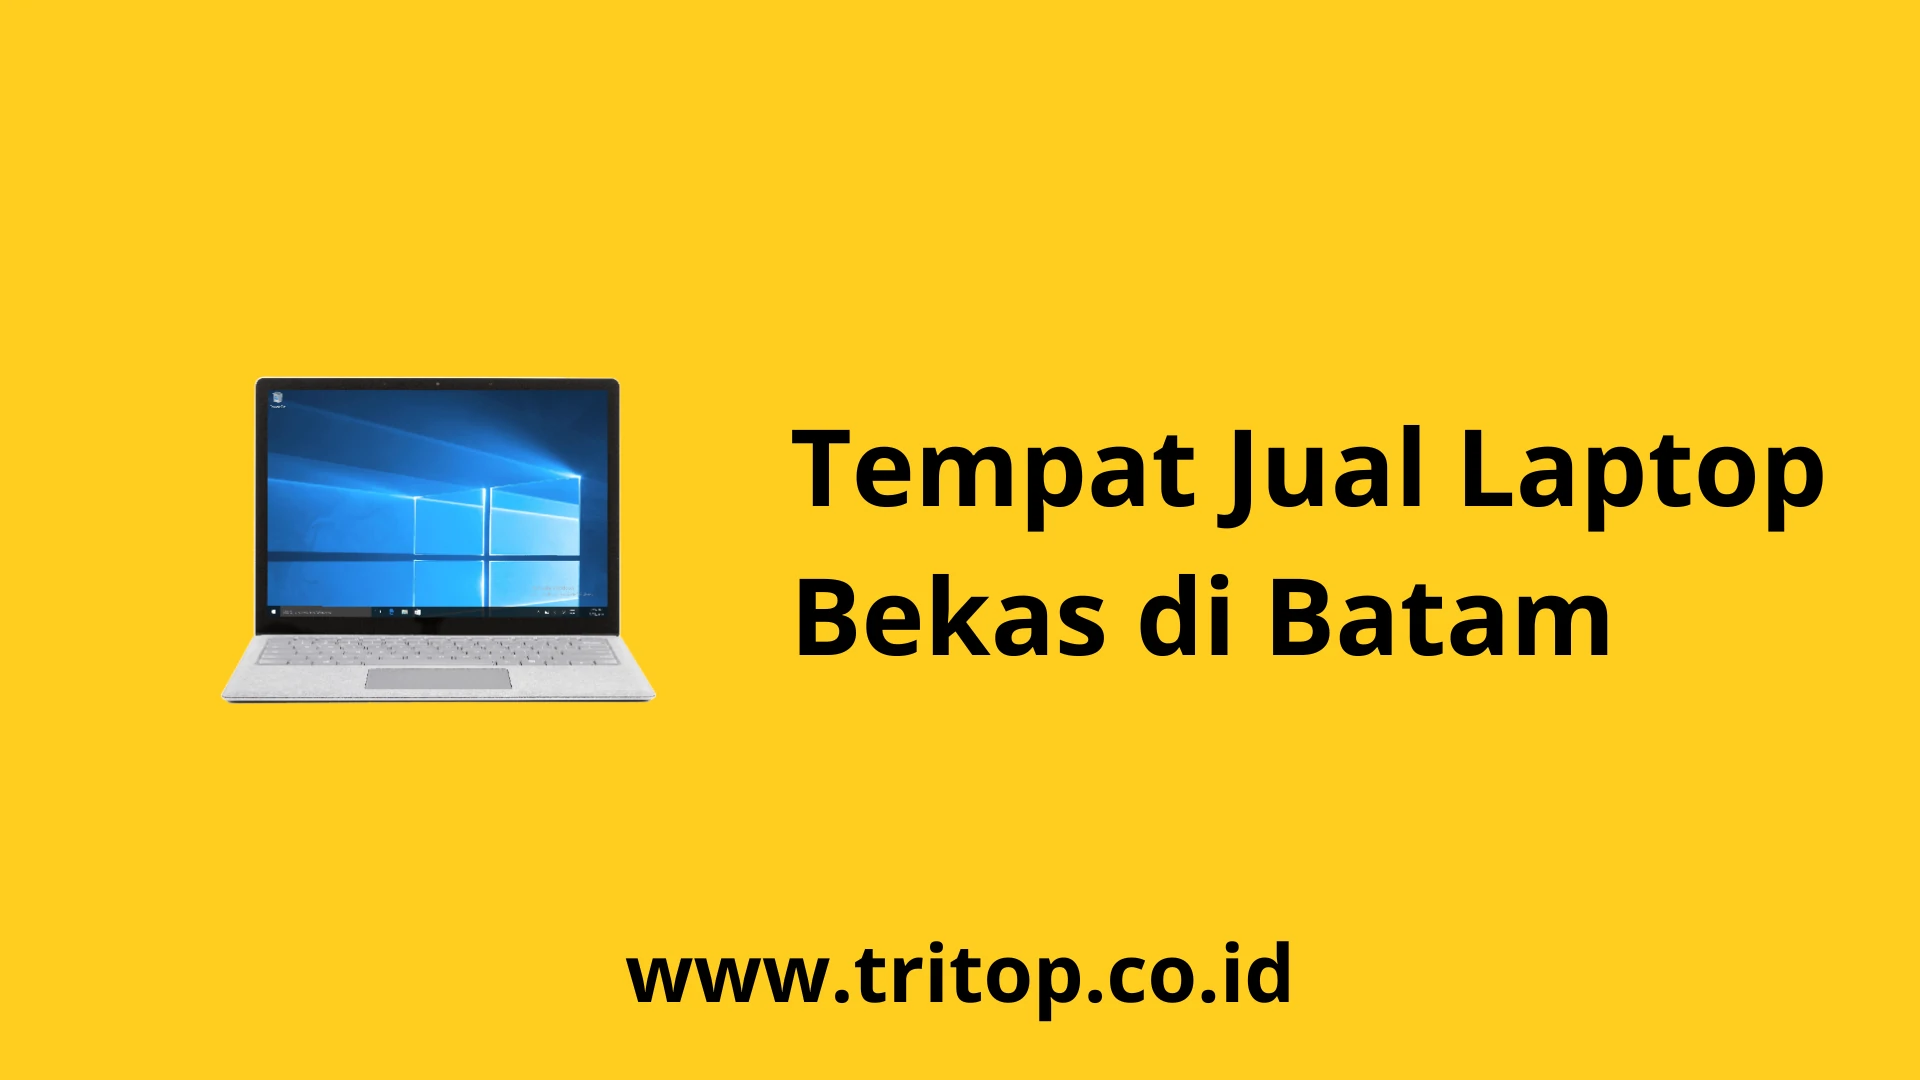 Jual Laptop Bekas Batam Tritop.co.id